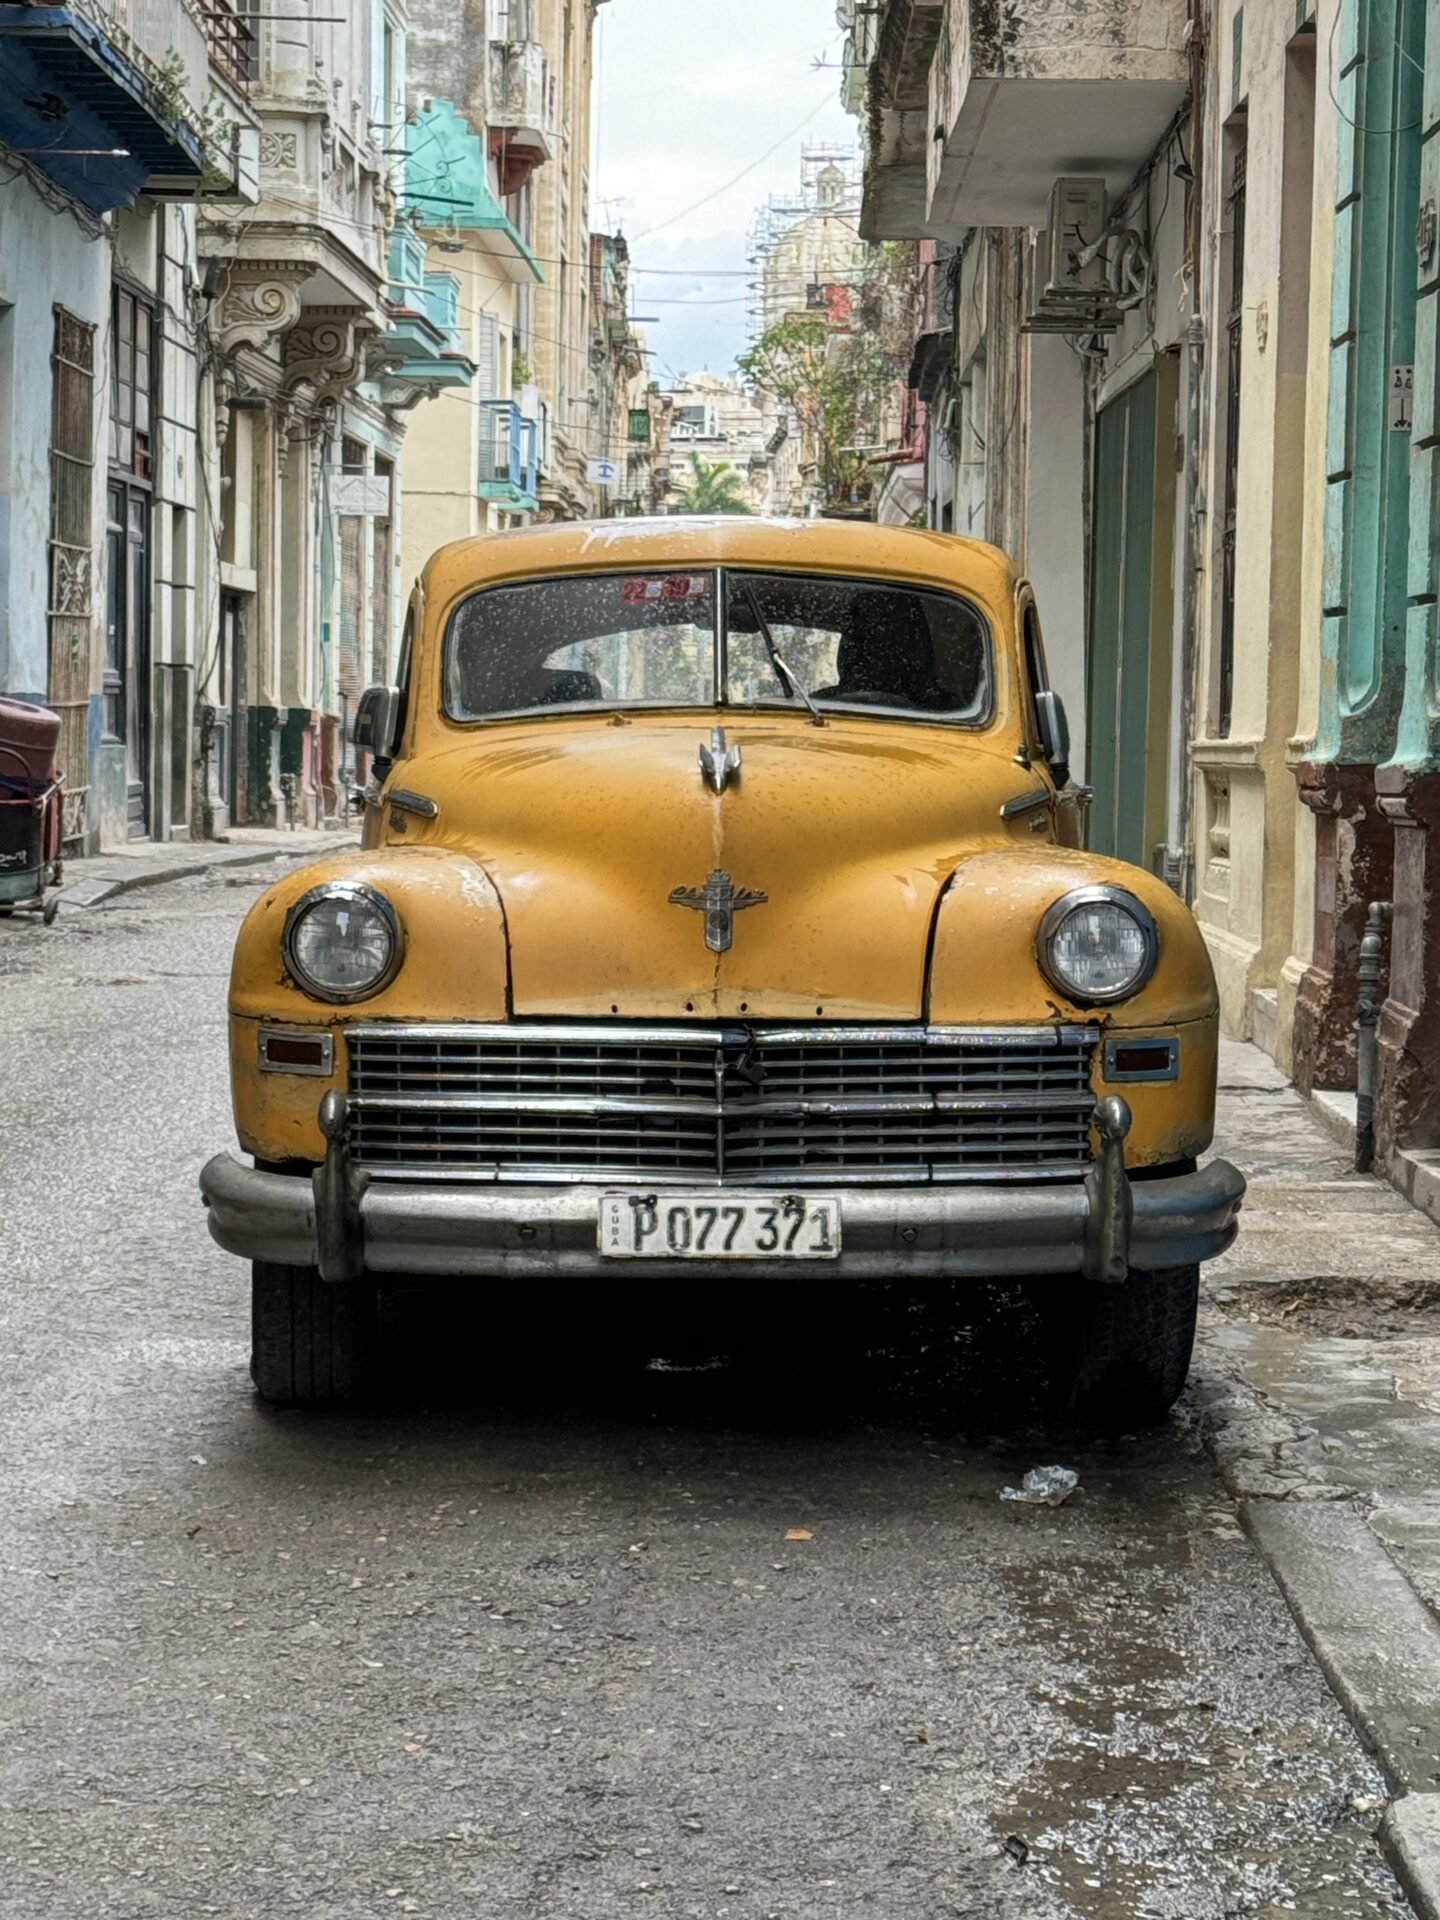 Large yellow classic American car set against buildings in Old Havana, Cuba, by Carol Schiraldi of Carol's Little World 